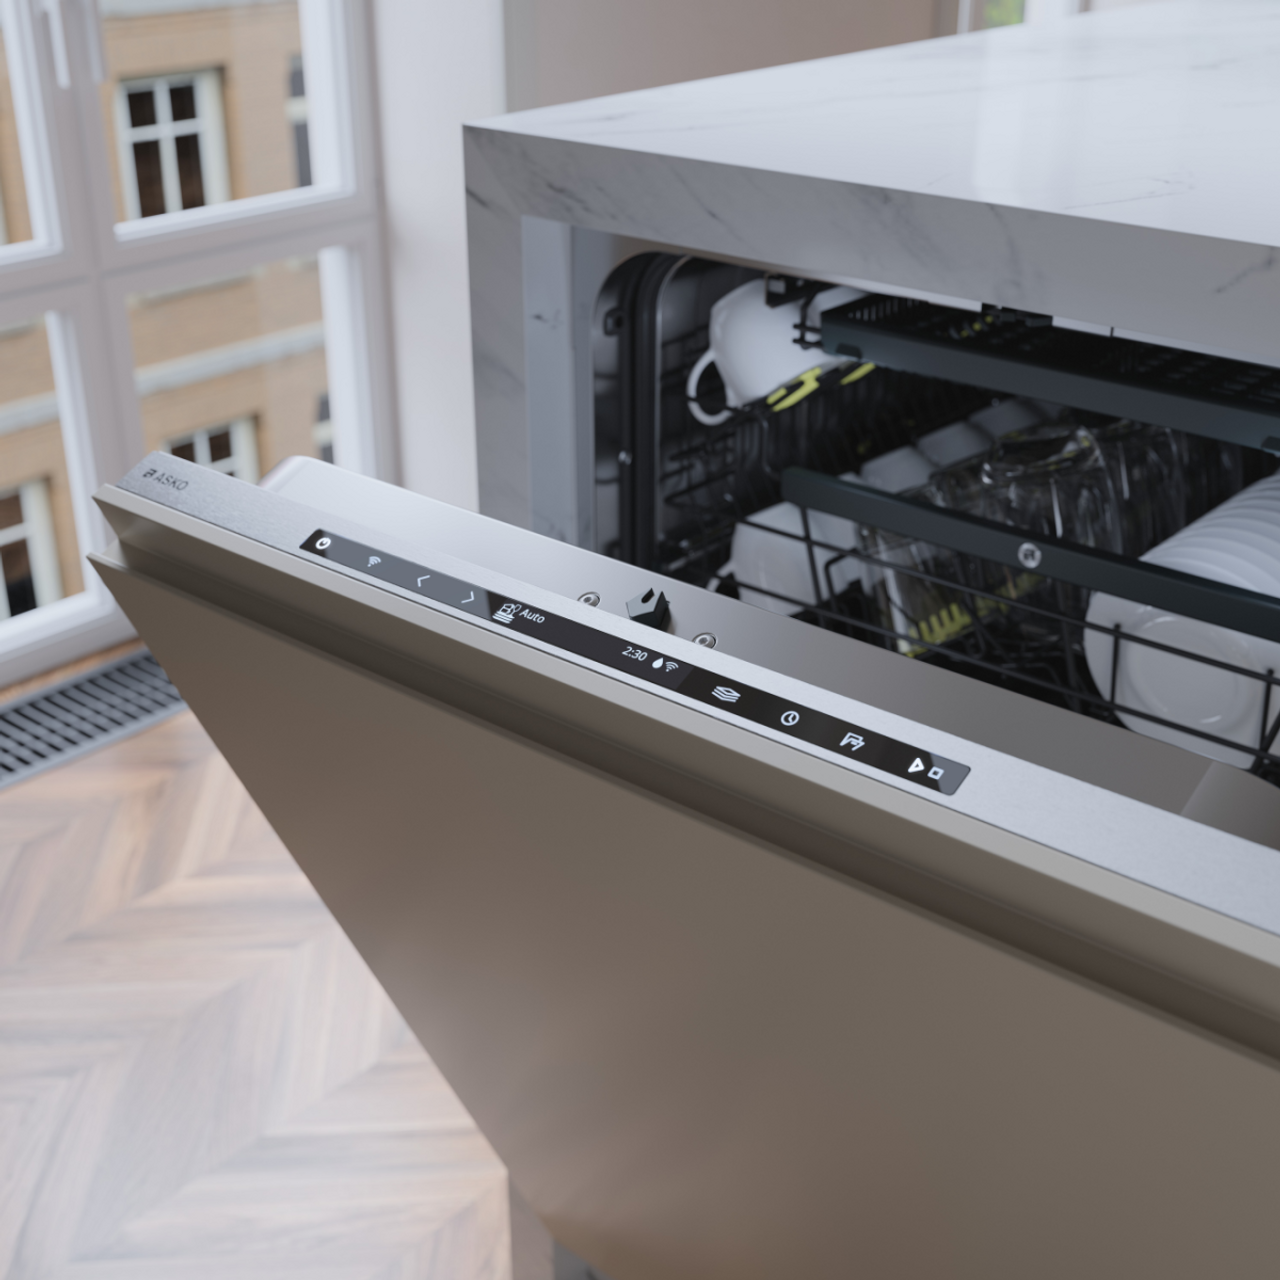 DSD767UXXL - 86cm XXL Style Fully Integrated Dishwasher